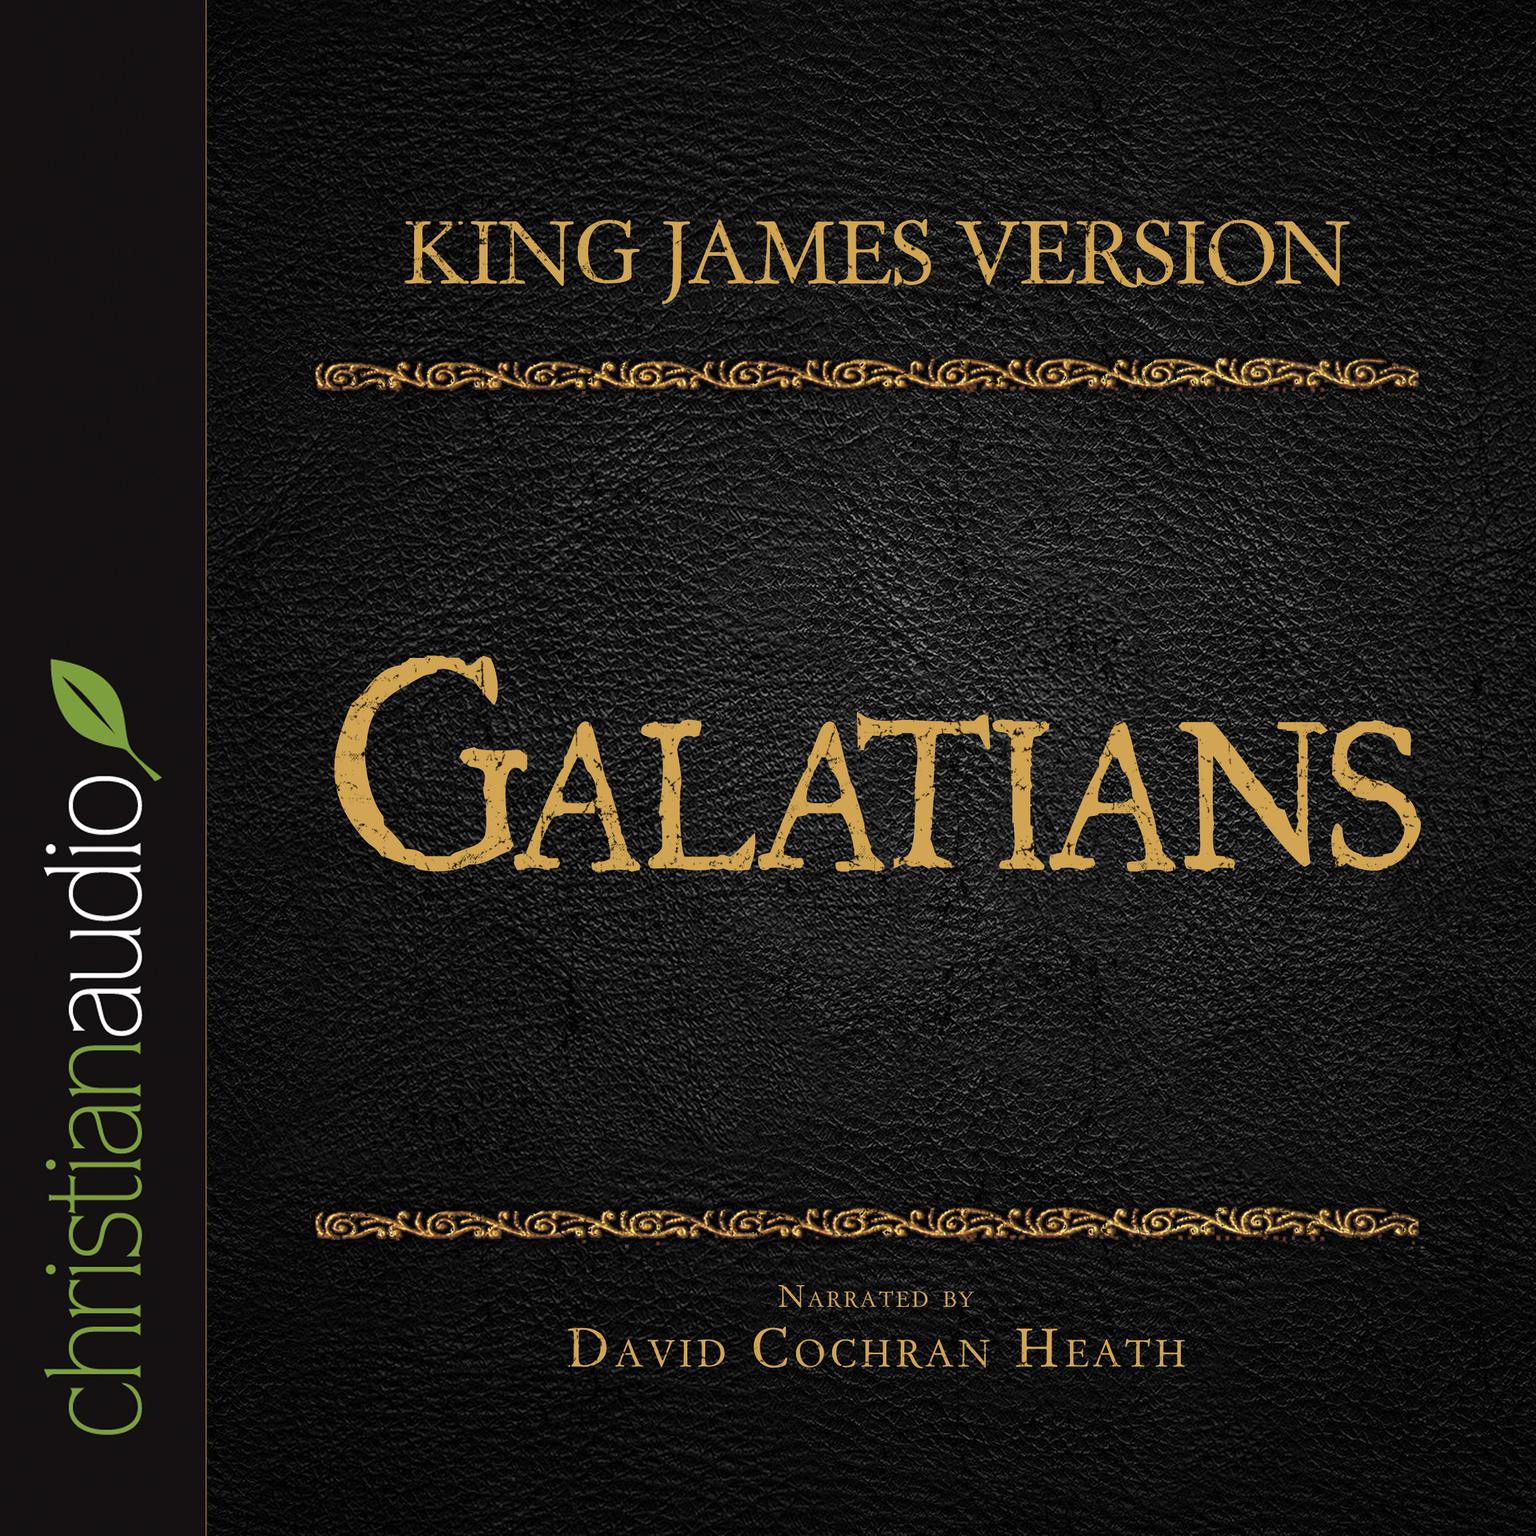 Holy Bible in Audio - King James Version: Galatians Audiobook, by David Cochran Heath